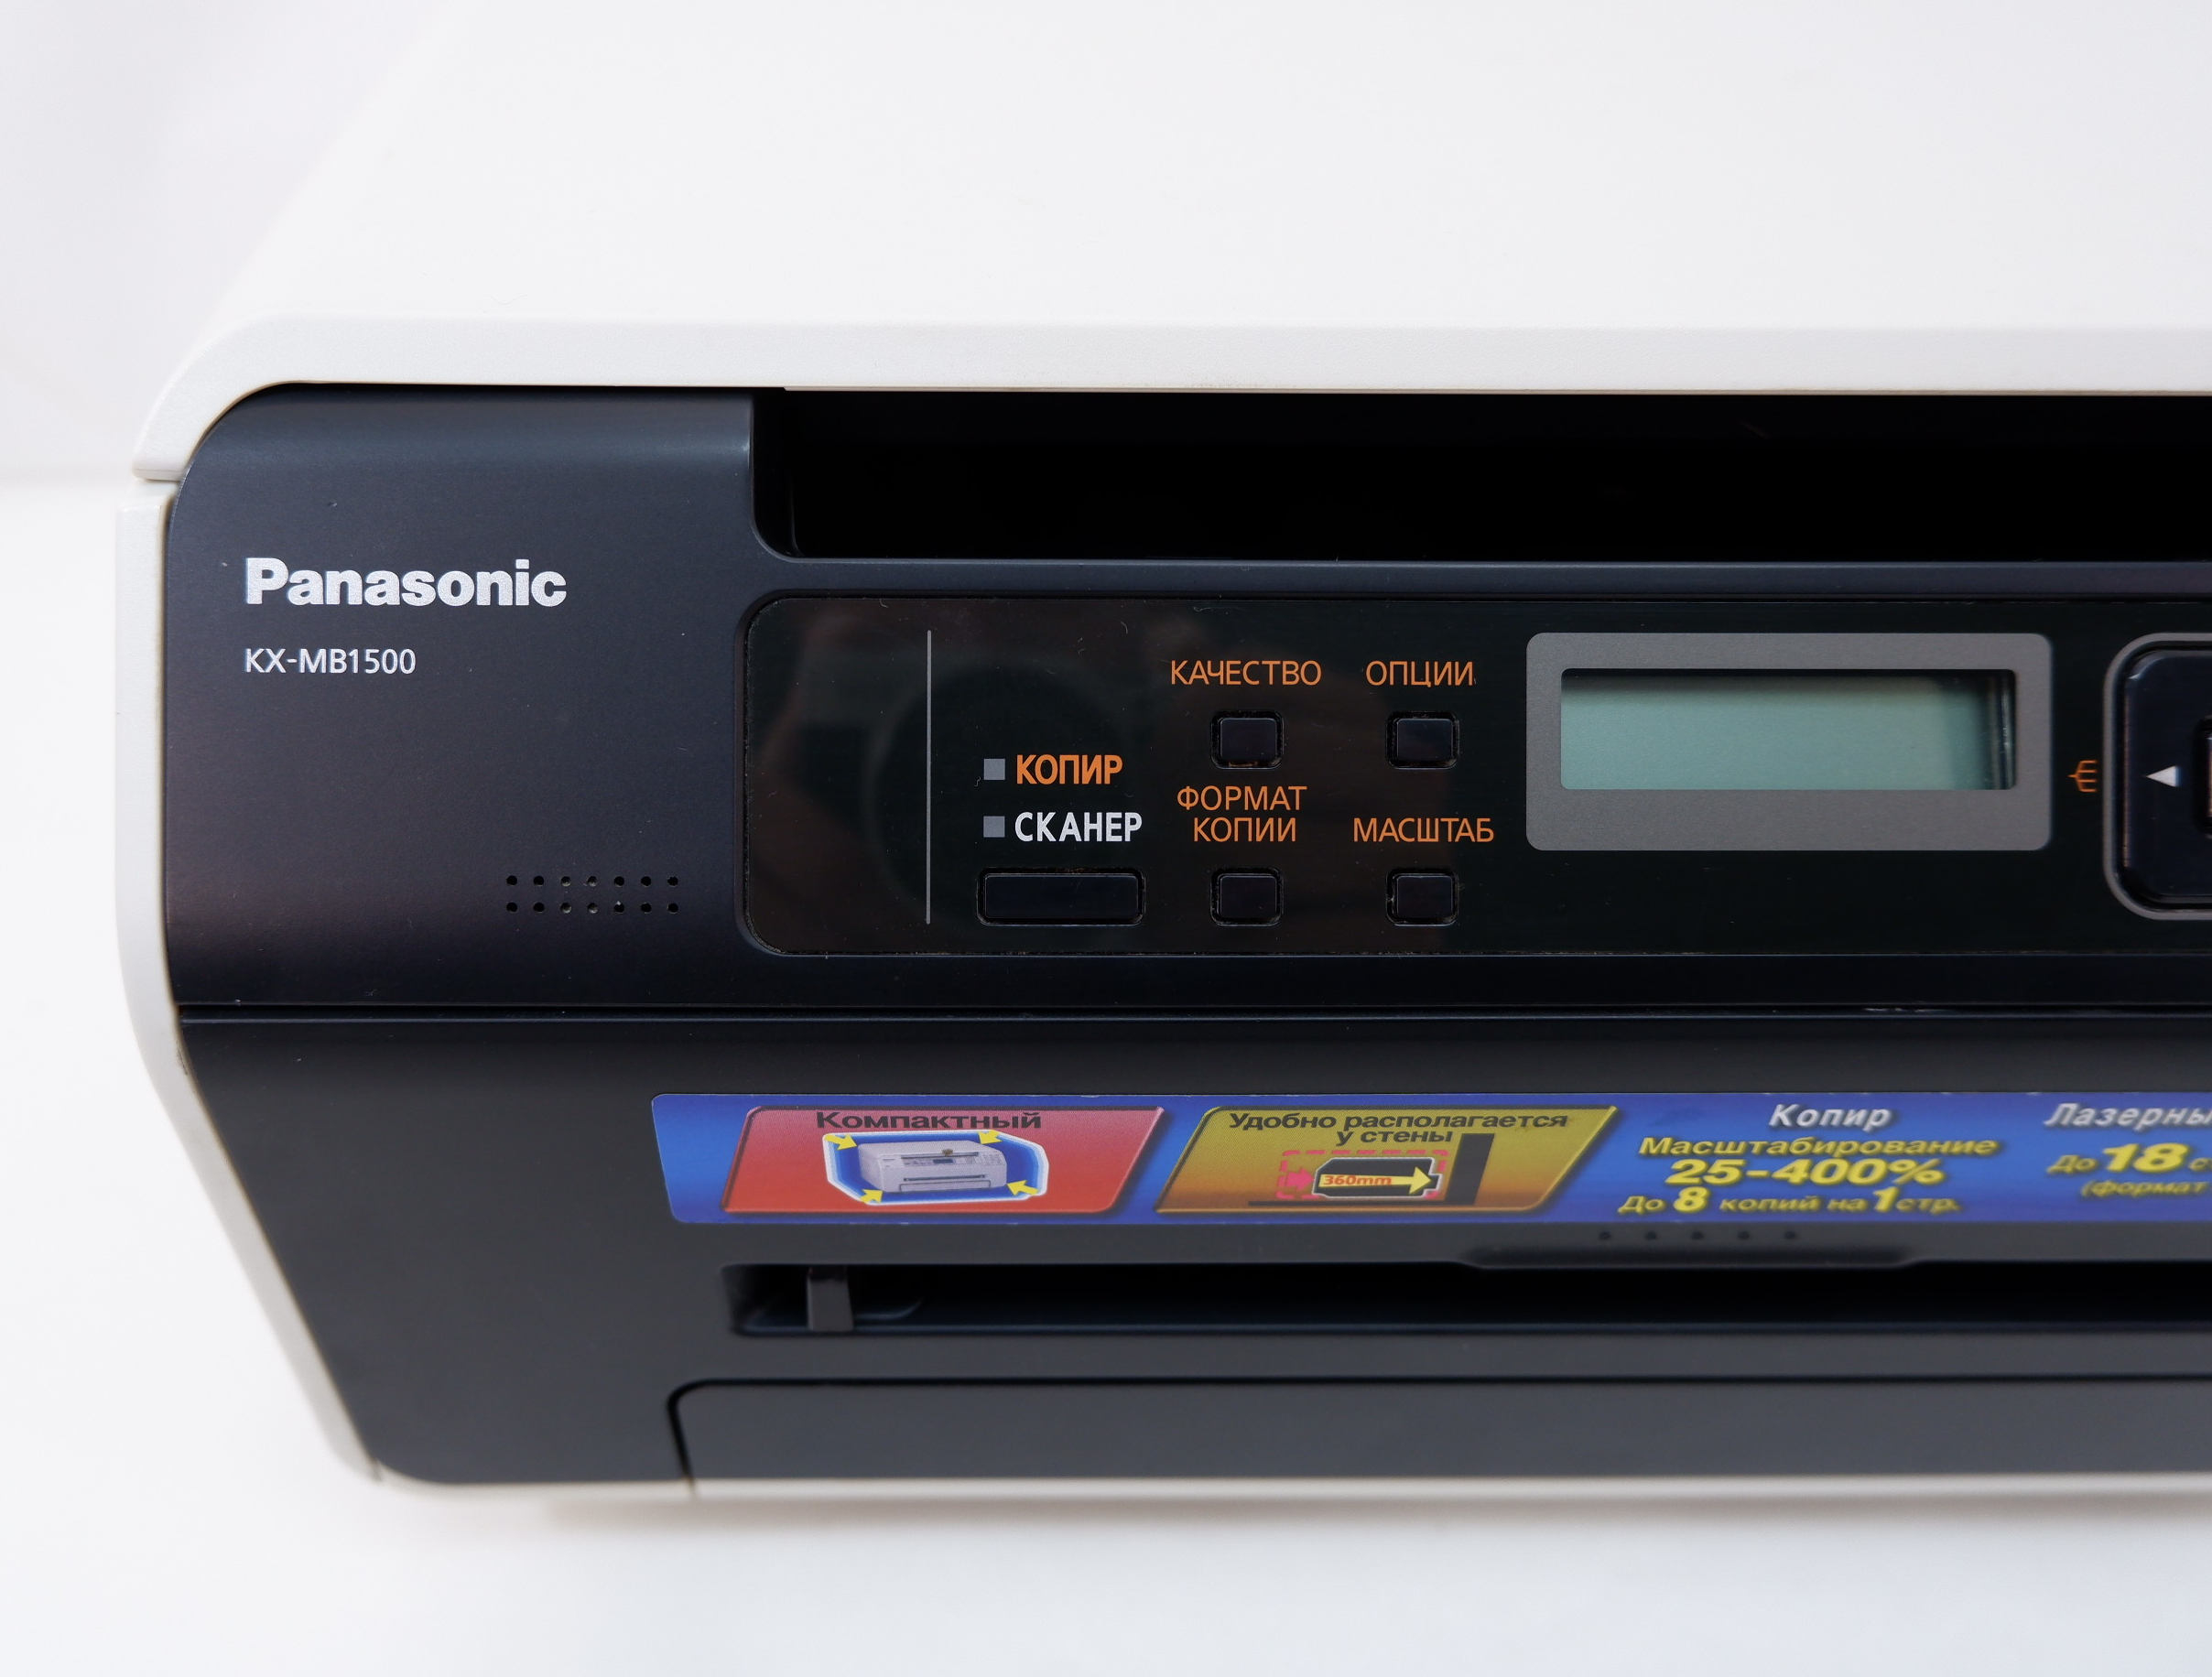 Panasonic kx mb1500 купить. МФУ Панасоник КХ-мв1500. Panasonic KX-mb1500. Принтер Panasonic KX-mb1500. Лазерный принтер Panasonic KX-mb1500.